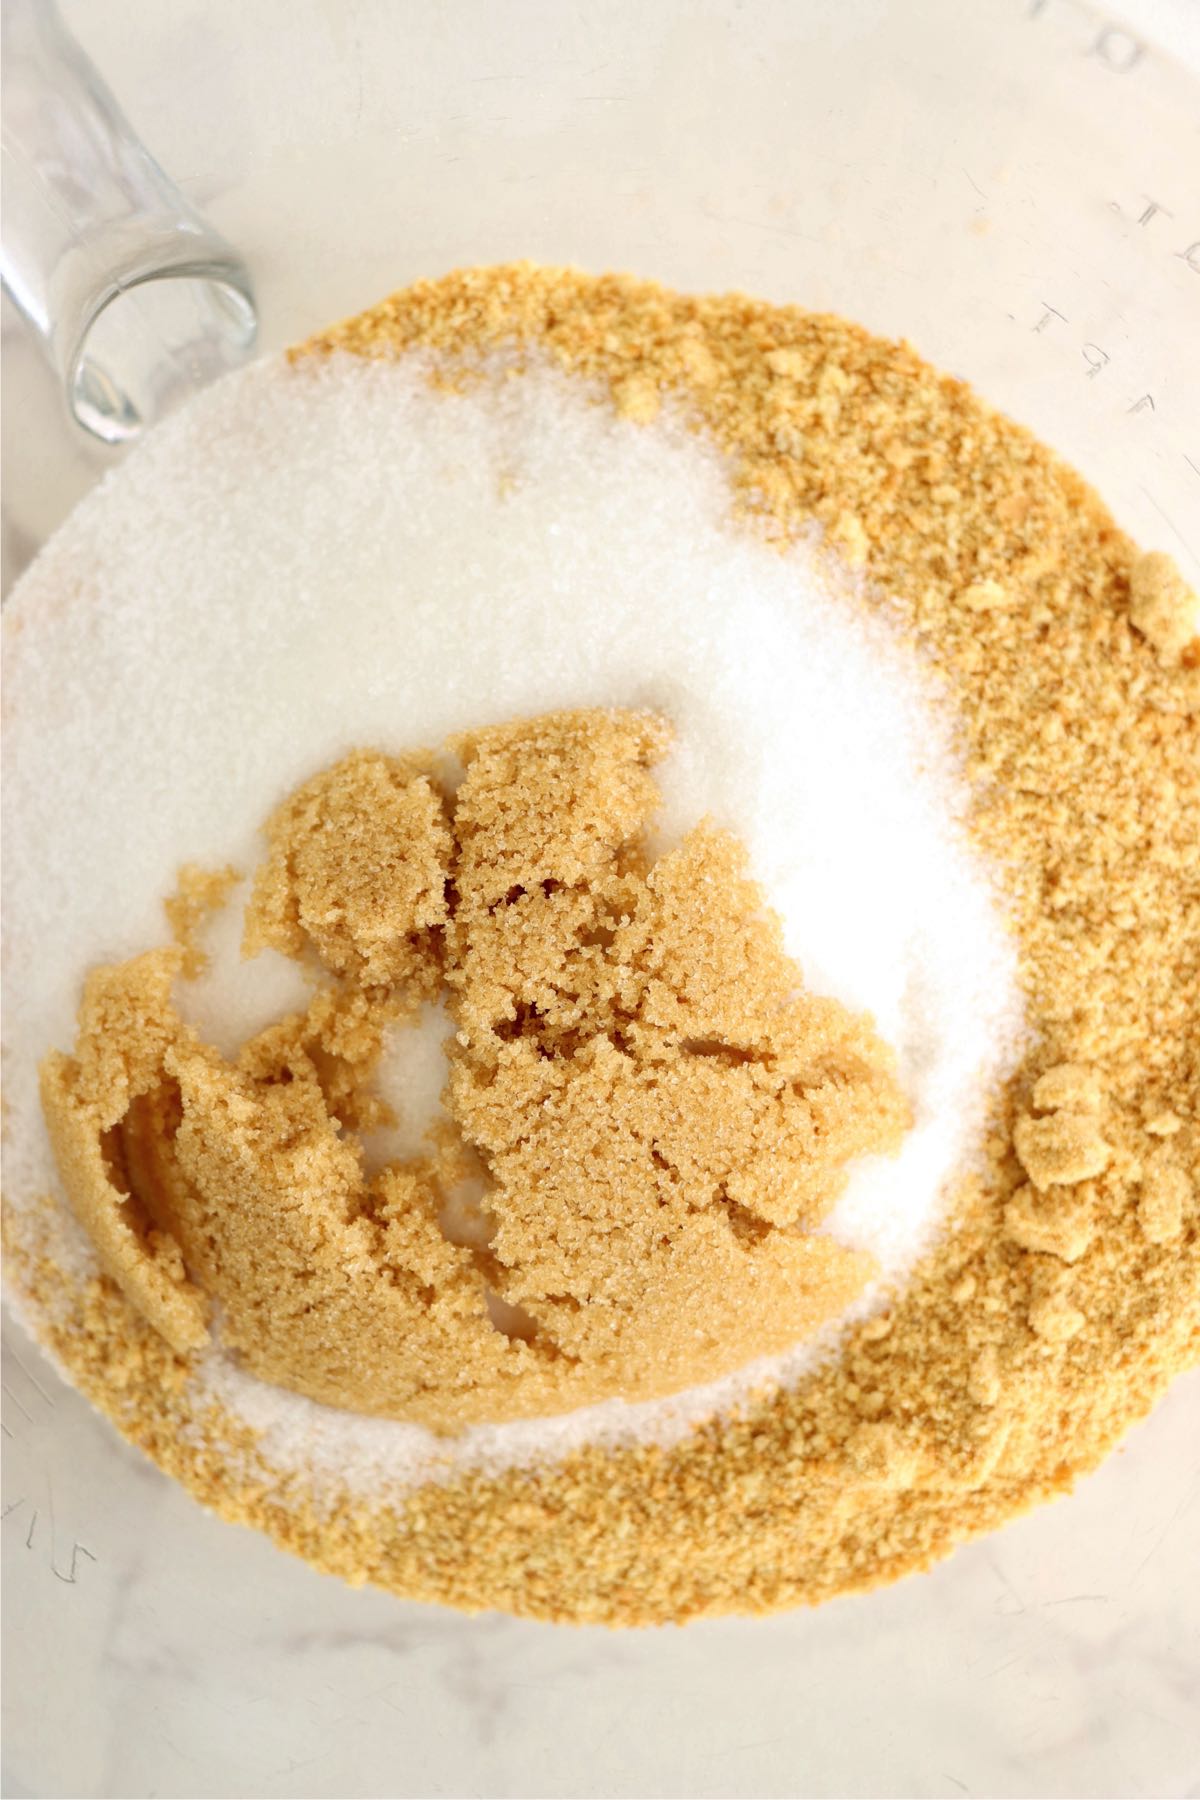 Graham cracker crumbs, sugar and brown sugar in a mixing bowl